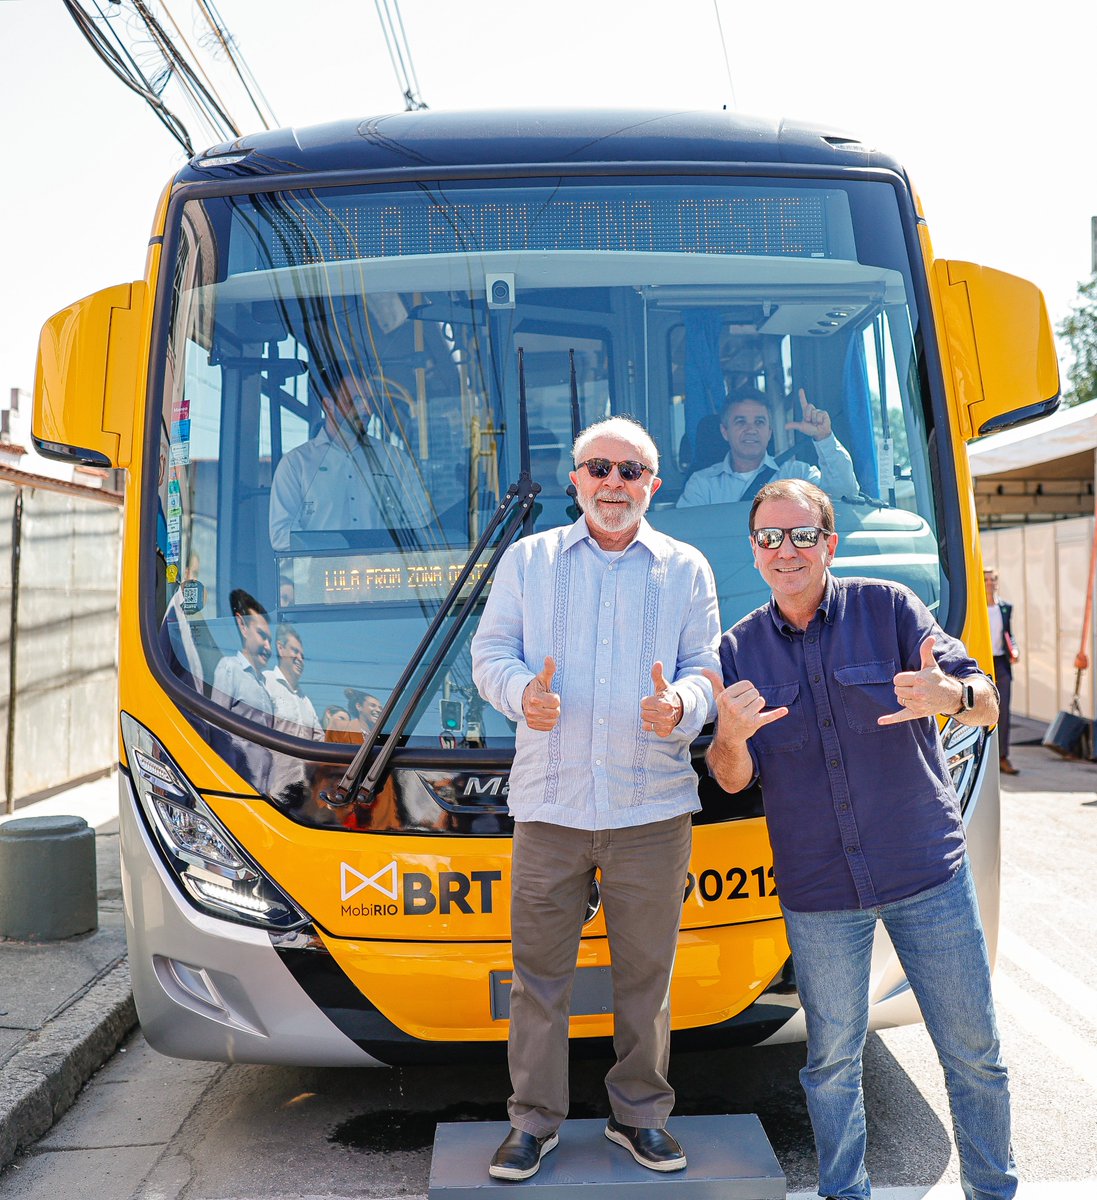 BRT from Rio - @eduardopaes feat. Lula 📸@ricardostuckert